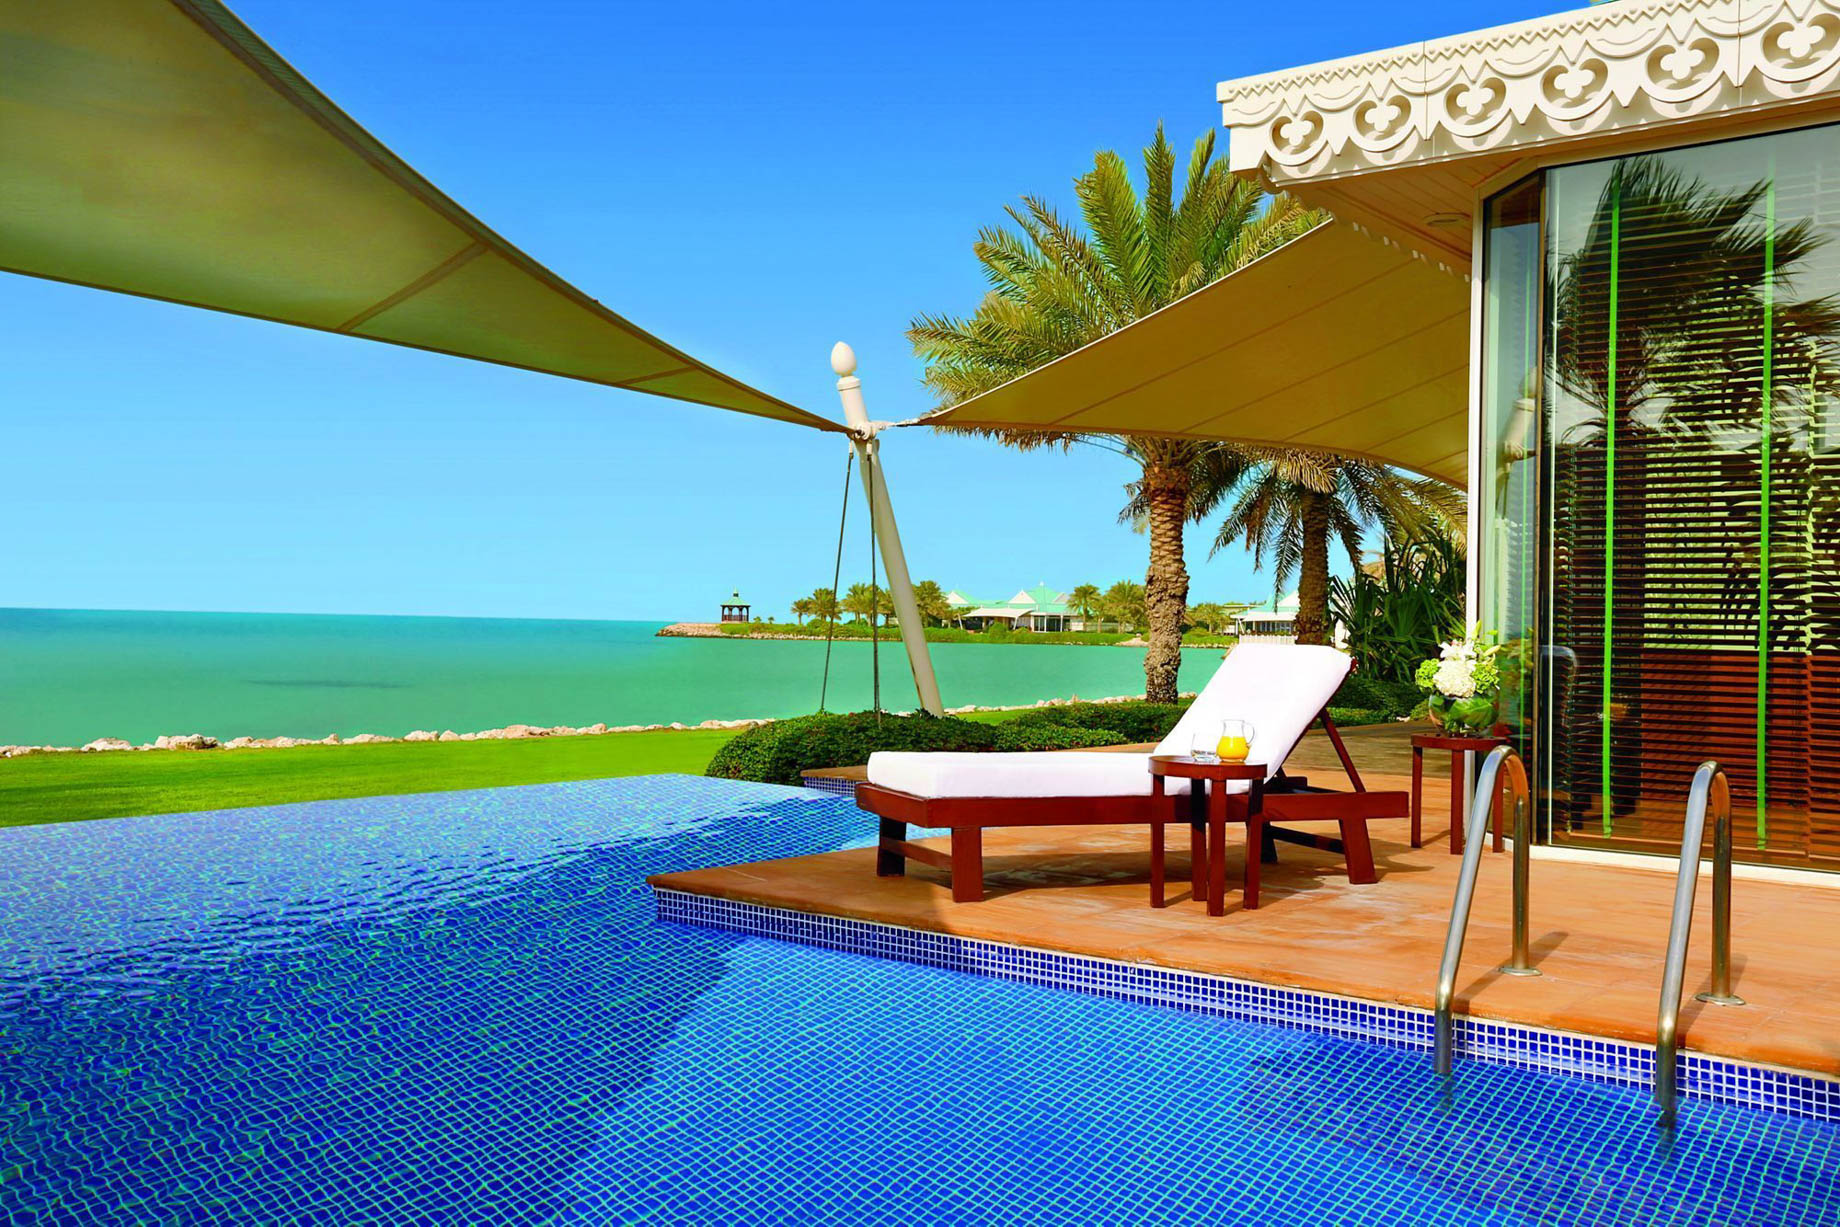 The Ritz-Carlton, Bahrain Resort Hotel – Manama, Bahrain – Villa Pool Deck Ocean View